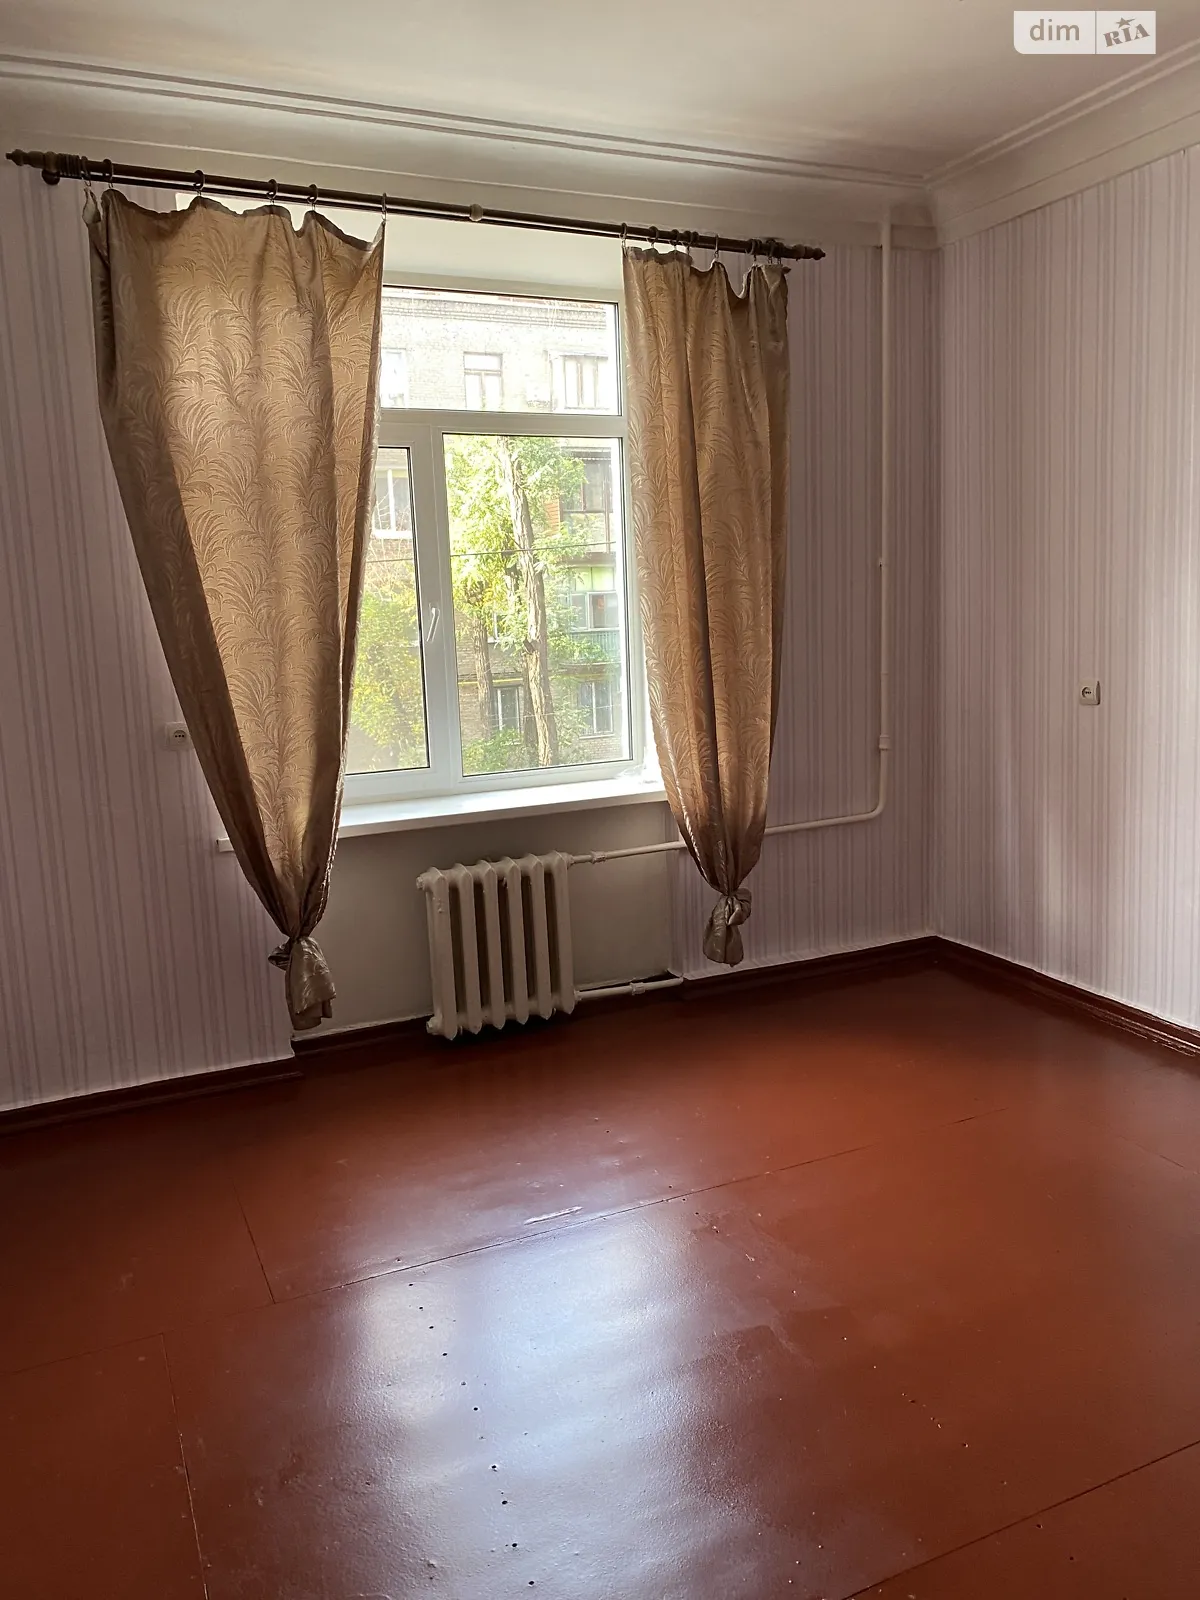 Продается комната 18 кв. м в Запорожье, цена: 7000 $ - фото 1